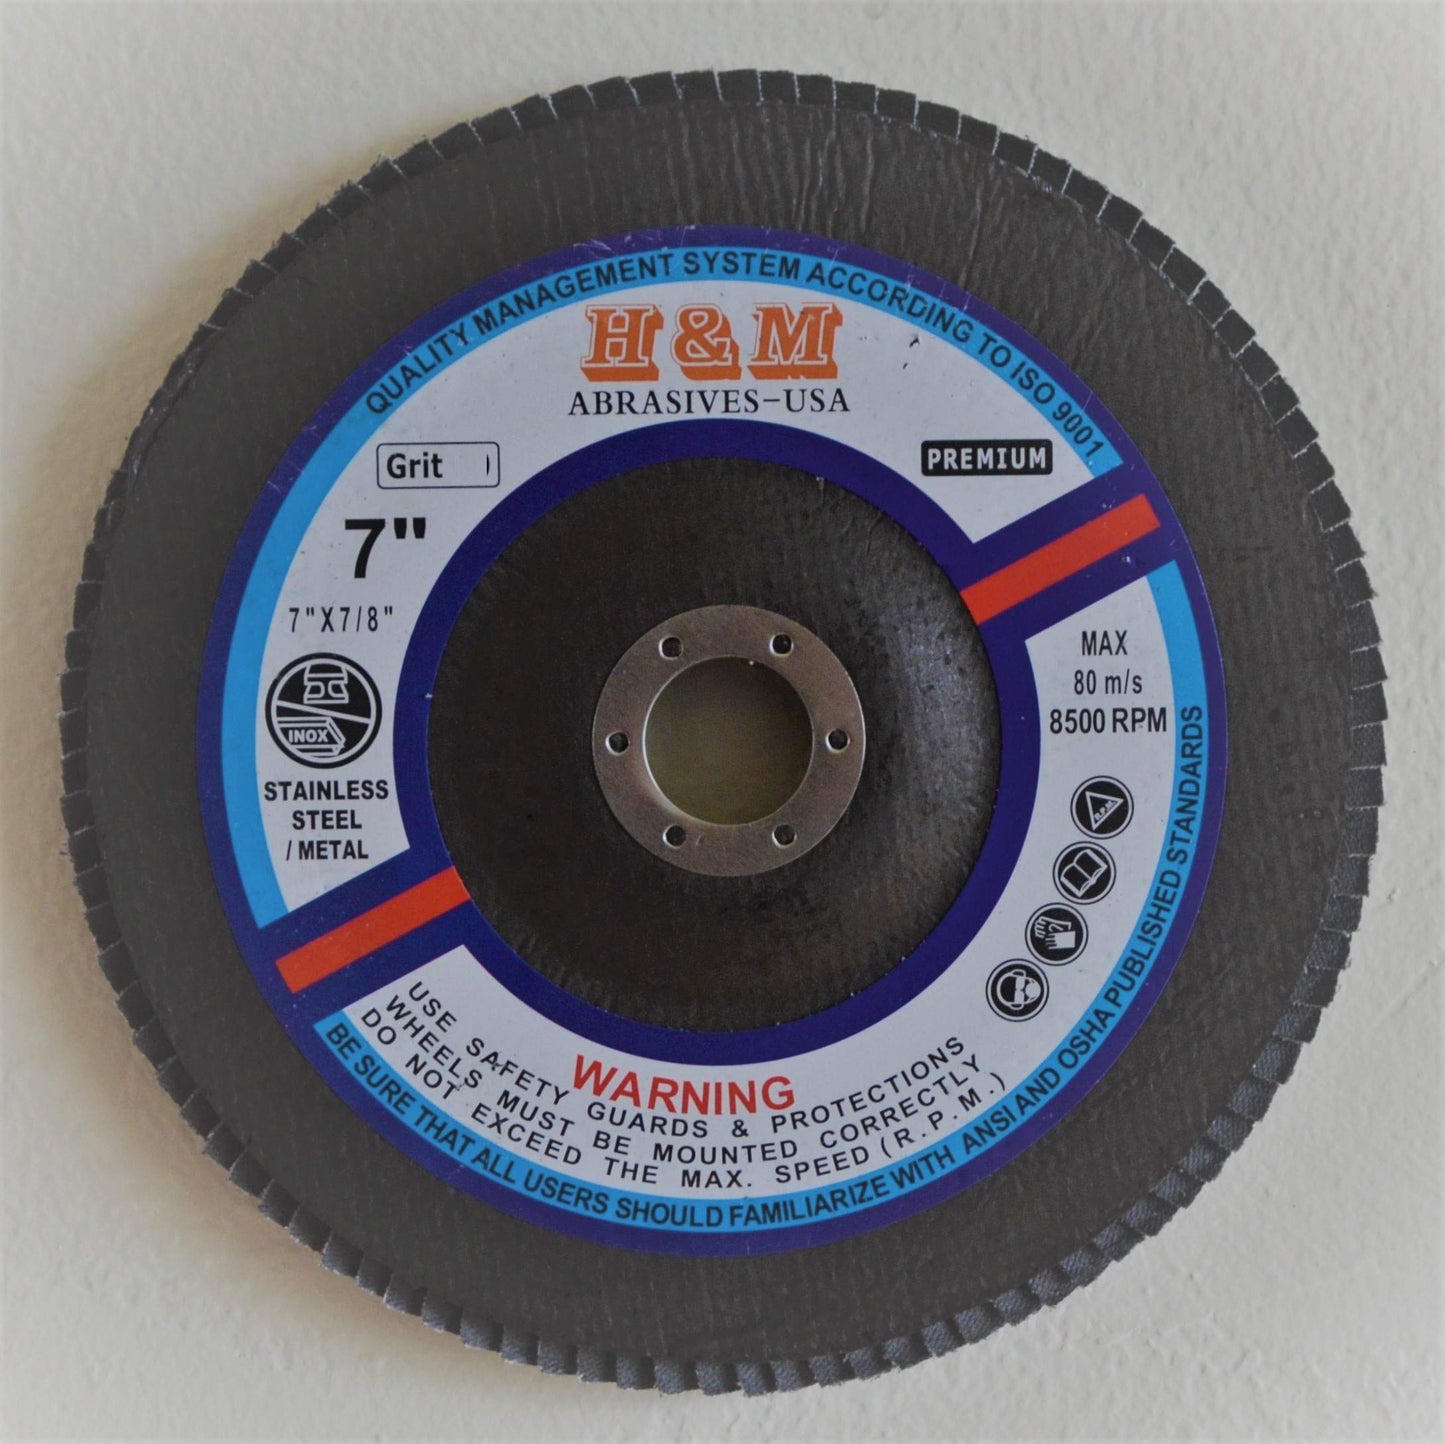 Premium FLAP DISCS 7" x 7/8" Zirconia 60 grit Grinding Wheel grinder tool - 5pcs Pack